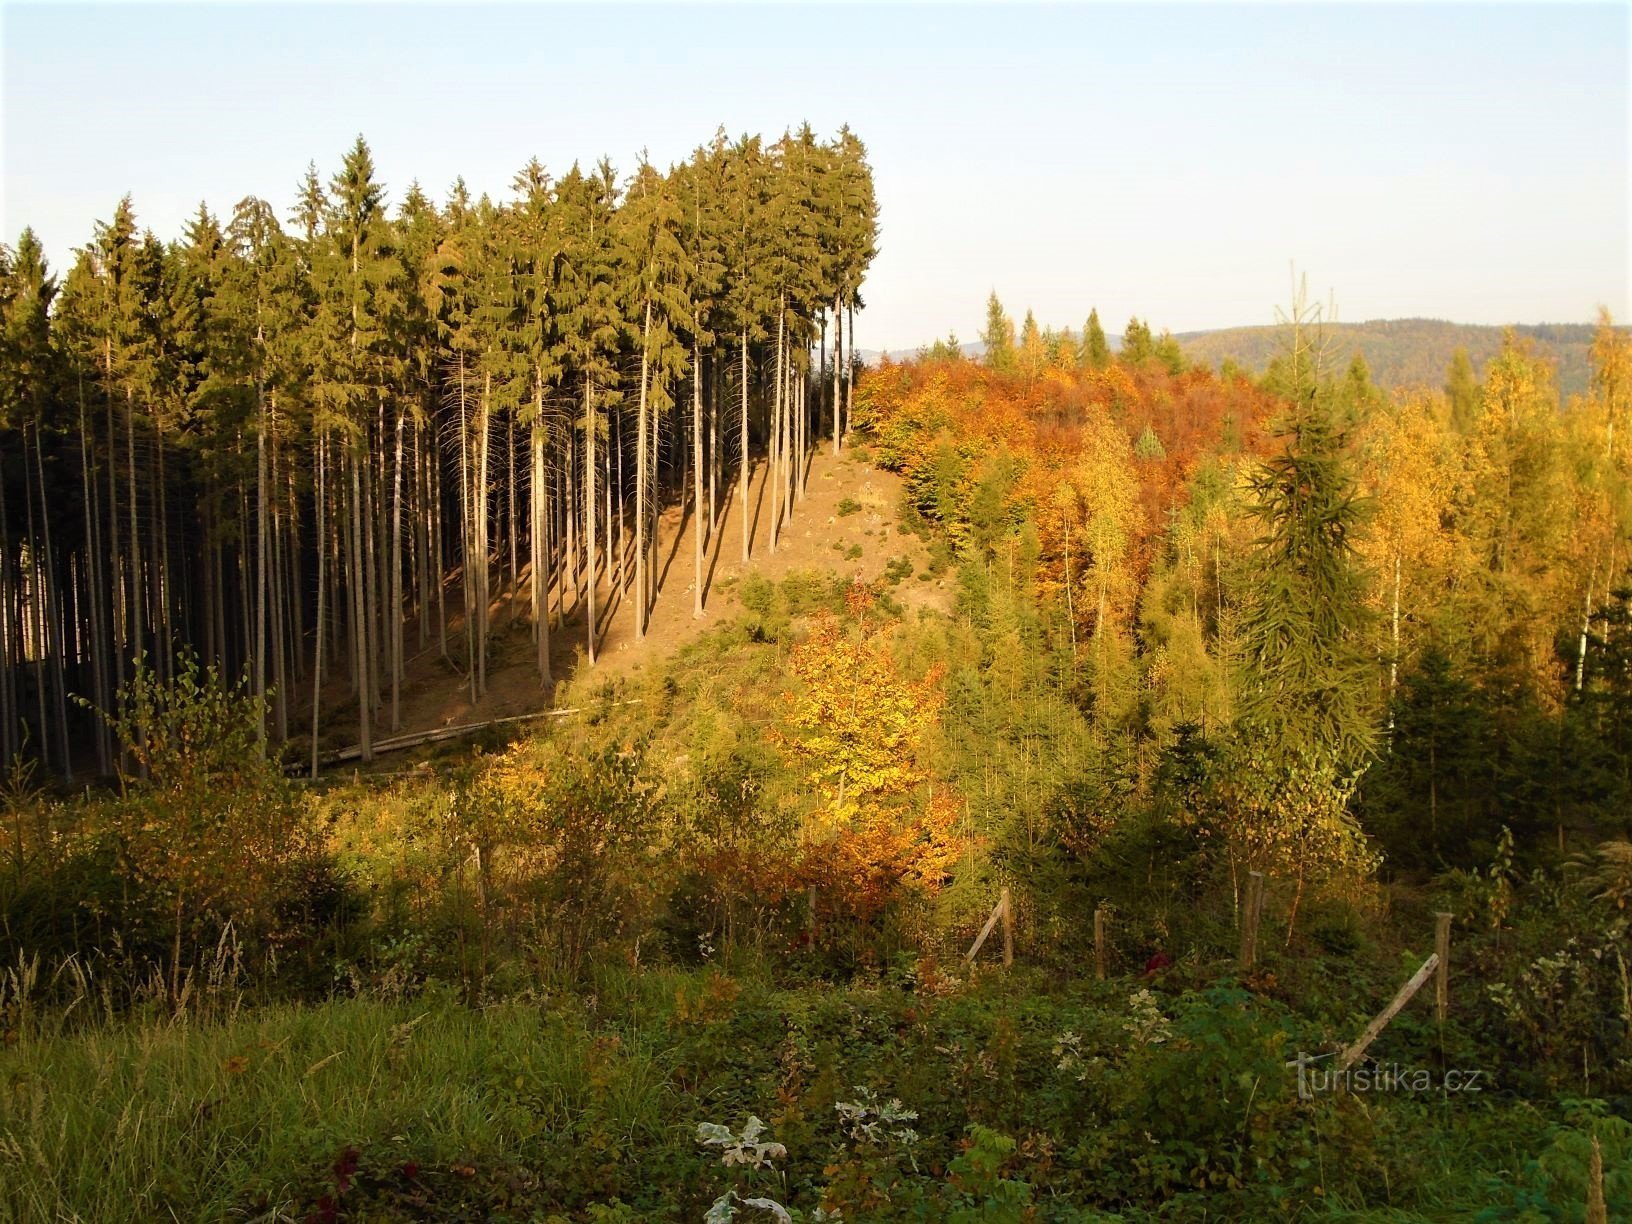 Forests near Spáleného kopce (Slatina nad Úpou, 17.10.2017/XNUMX/XNUMX)